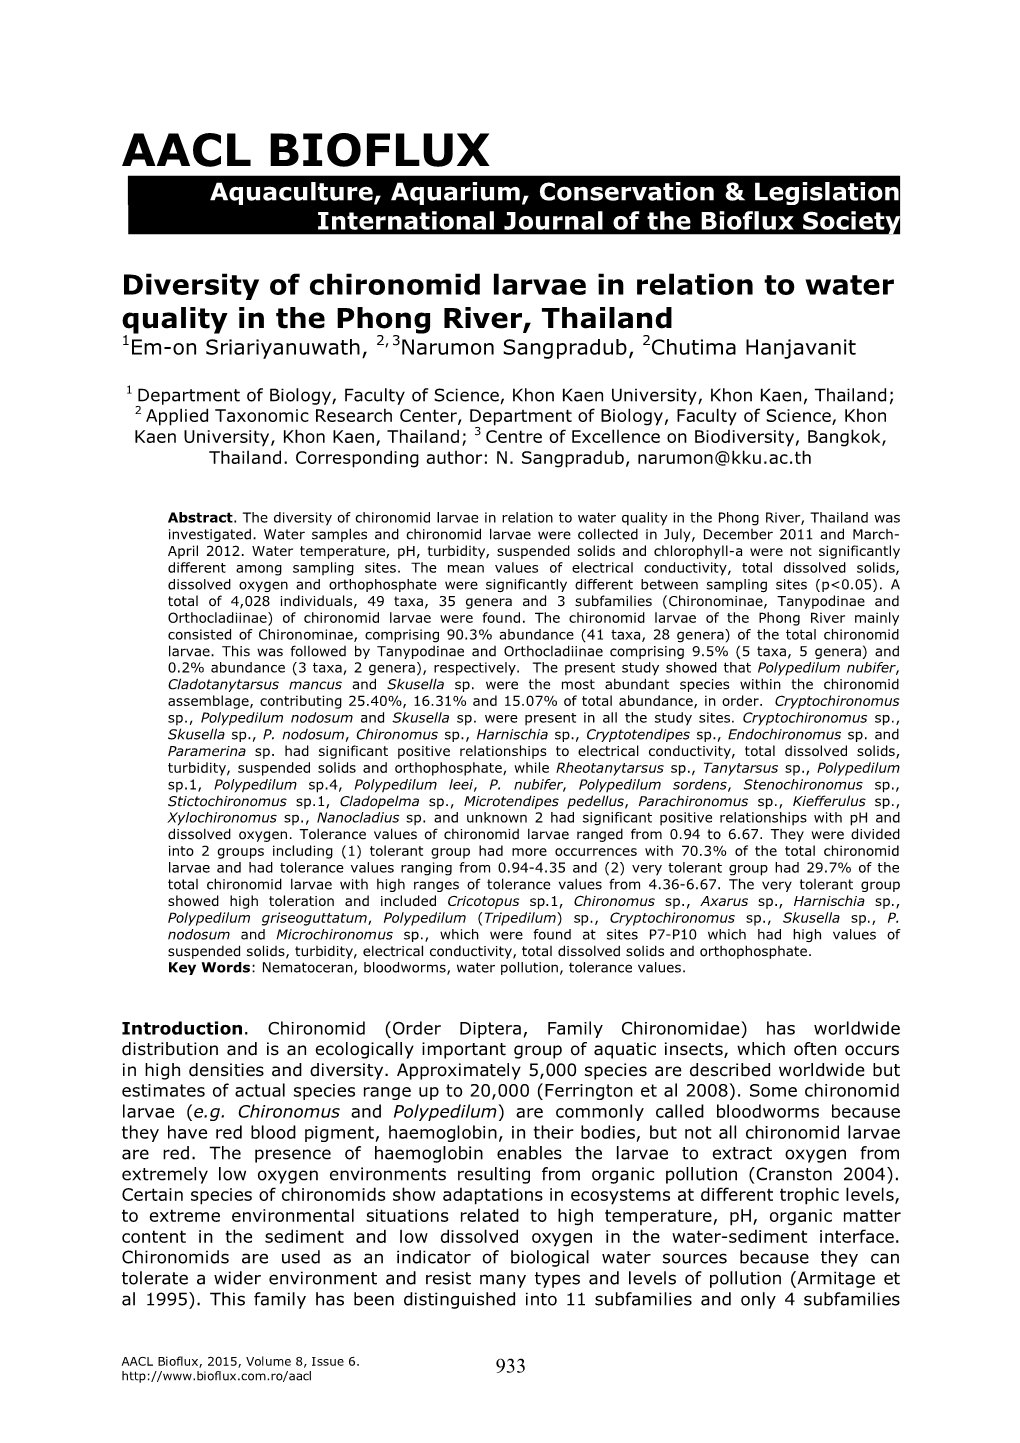 Diversity of Chironomid Larvae in Relation to Water Quality in the Phong River, Thailand 1Em-On Sriariyanuwath, 2, 3Narumon Sangpradub, 2Chutima Hanjavanit